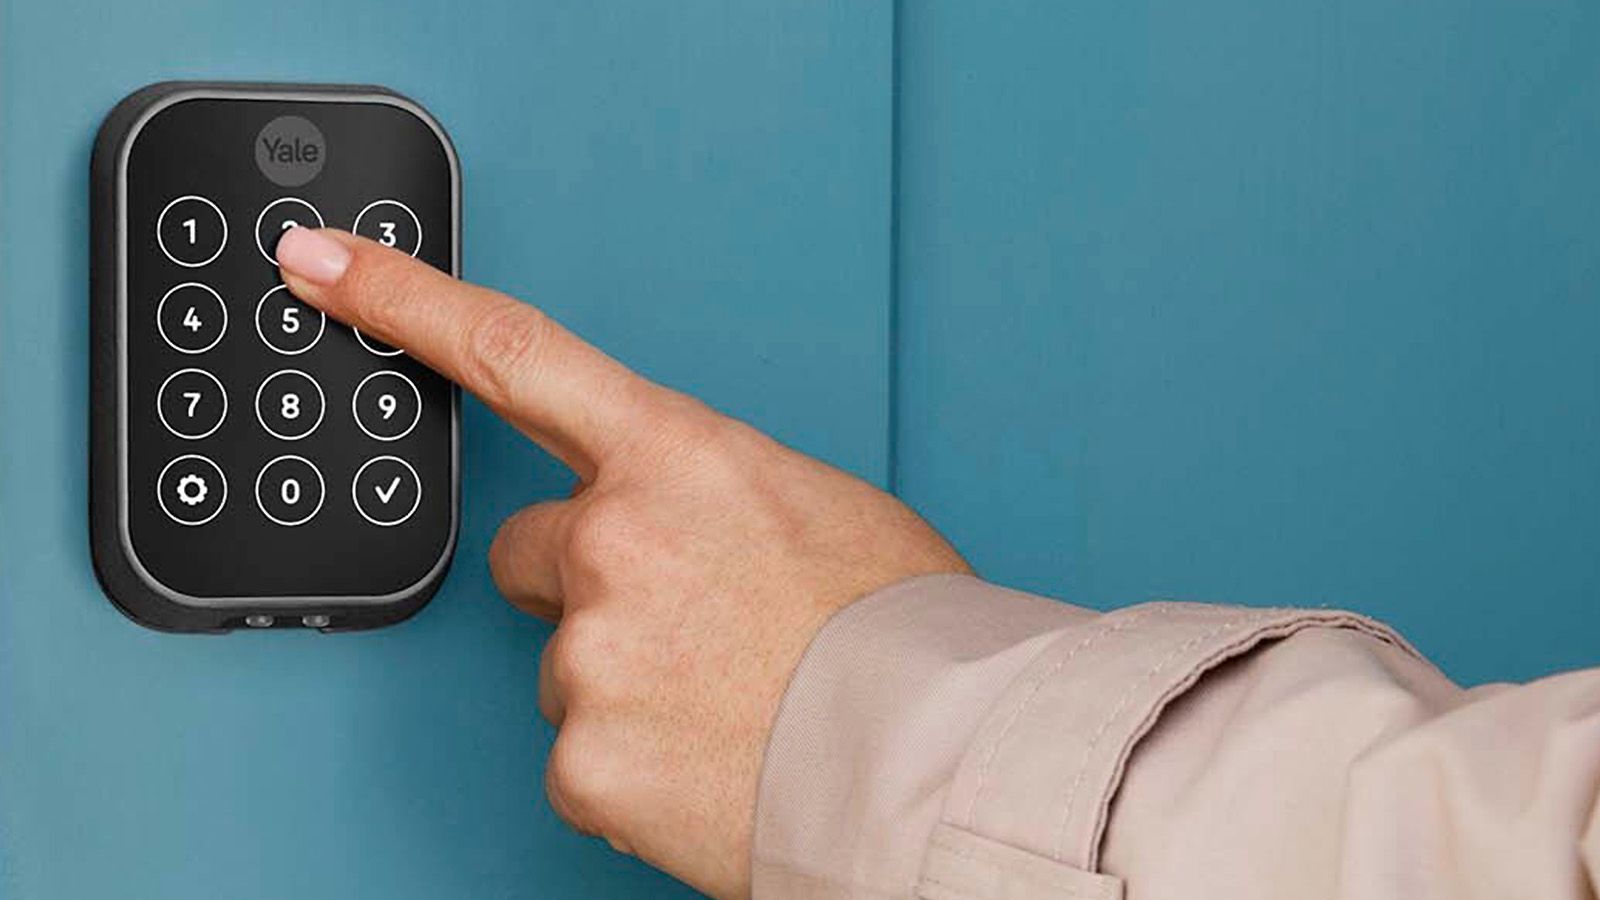 Keyless Entry Door Lock with Handle, UYF Electronic Keypad Deadbolt Lock  with Levers, Front Door Lock Set, Auto Lock, Smart Digital Touchscreen with